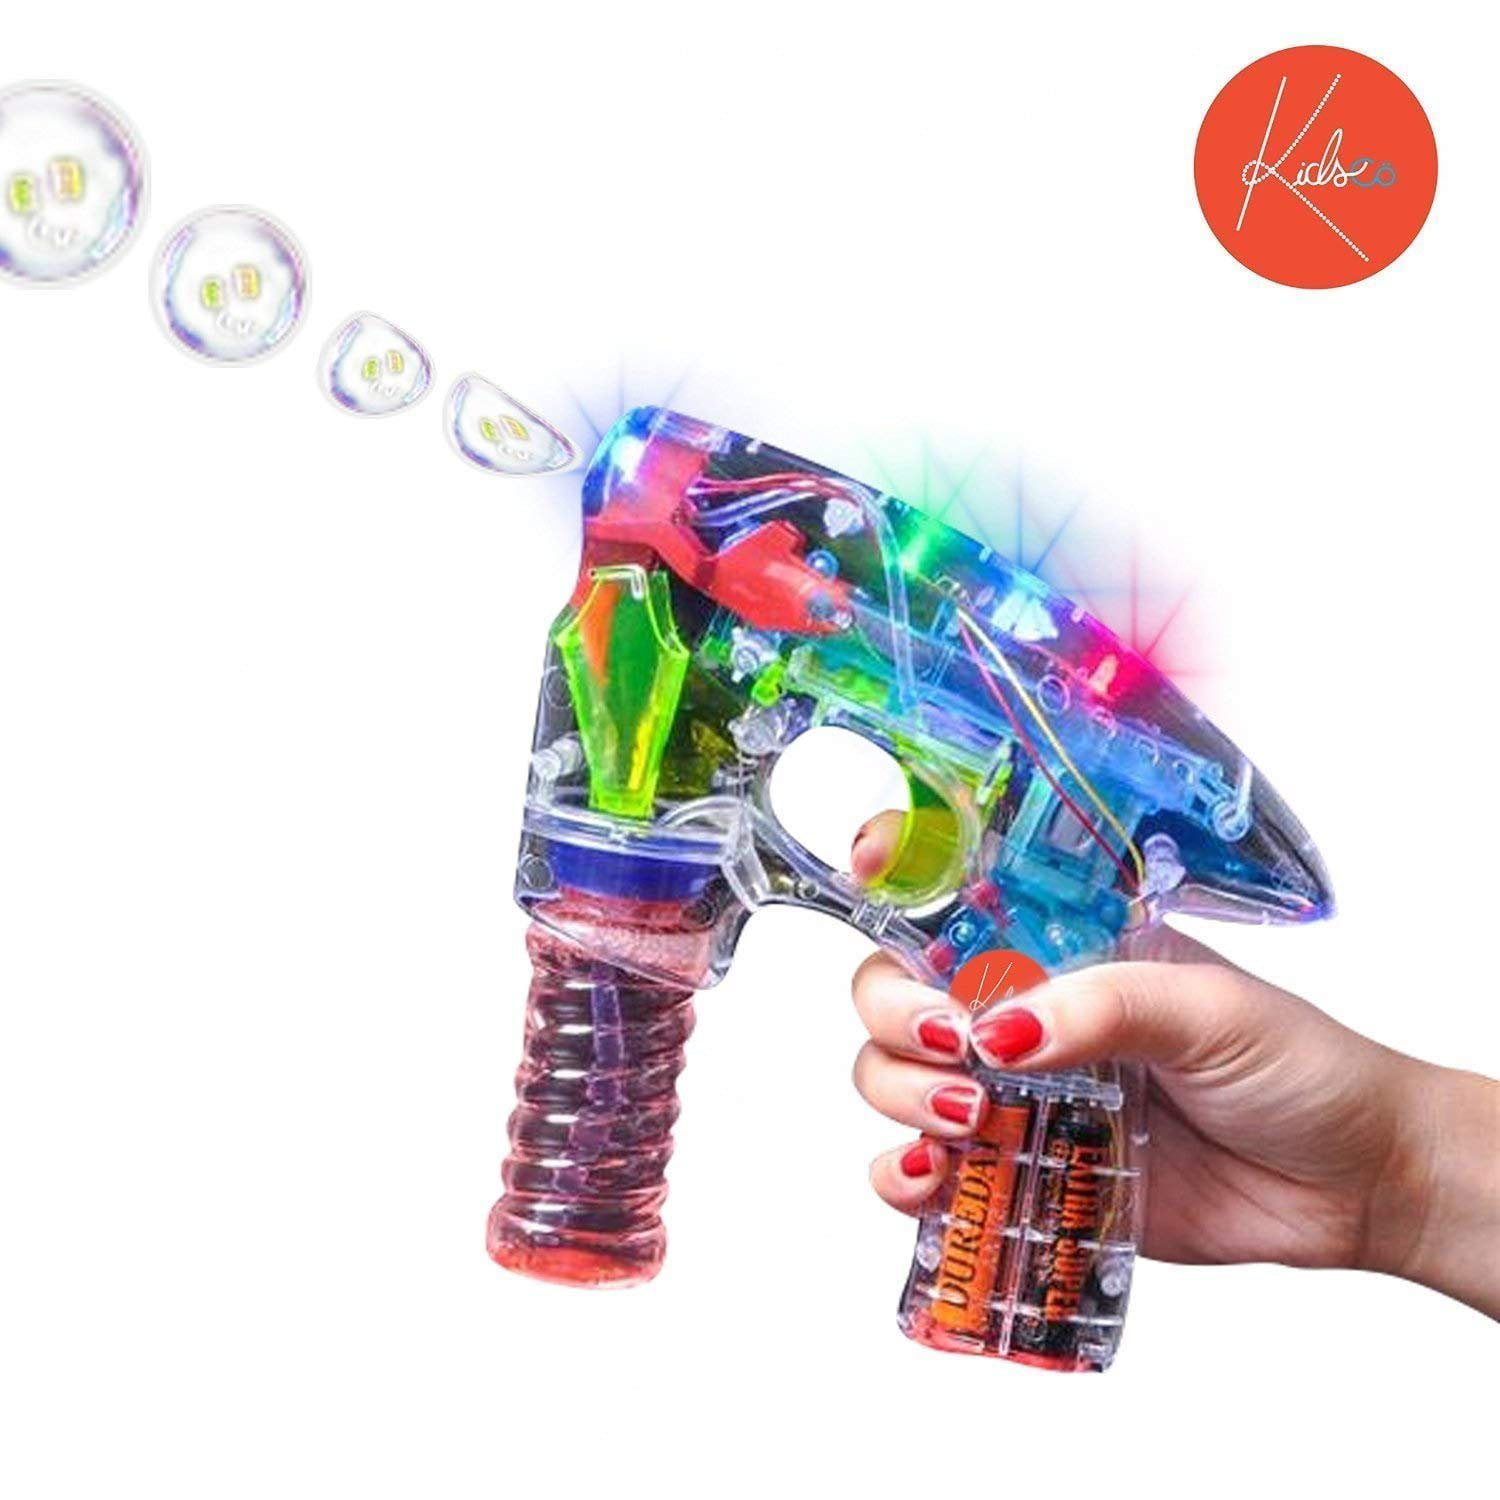  Bubble Gun 自動兒童玩具:泡泡槍生日派對用品適合4-8 歲兒童泡泡機槍每分鐘含15000  多個氣泡戶外玩具適合派對生日婚禮聖誕節